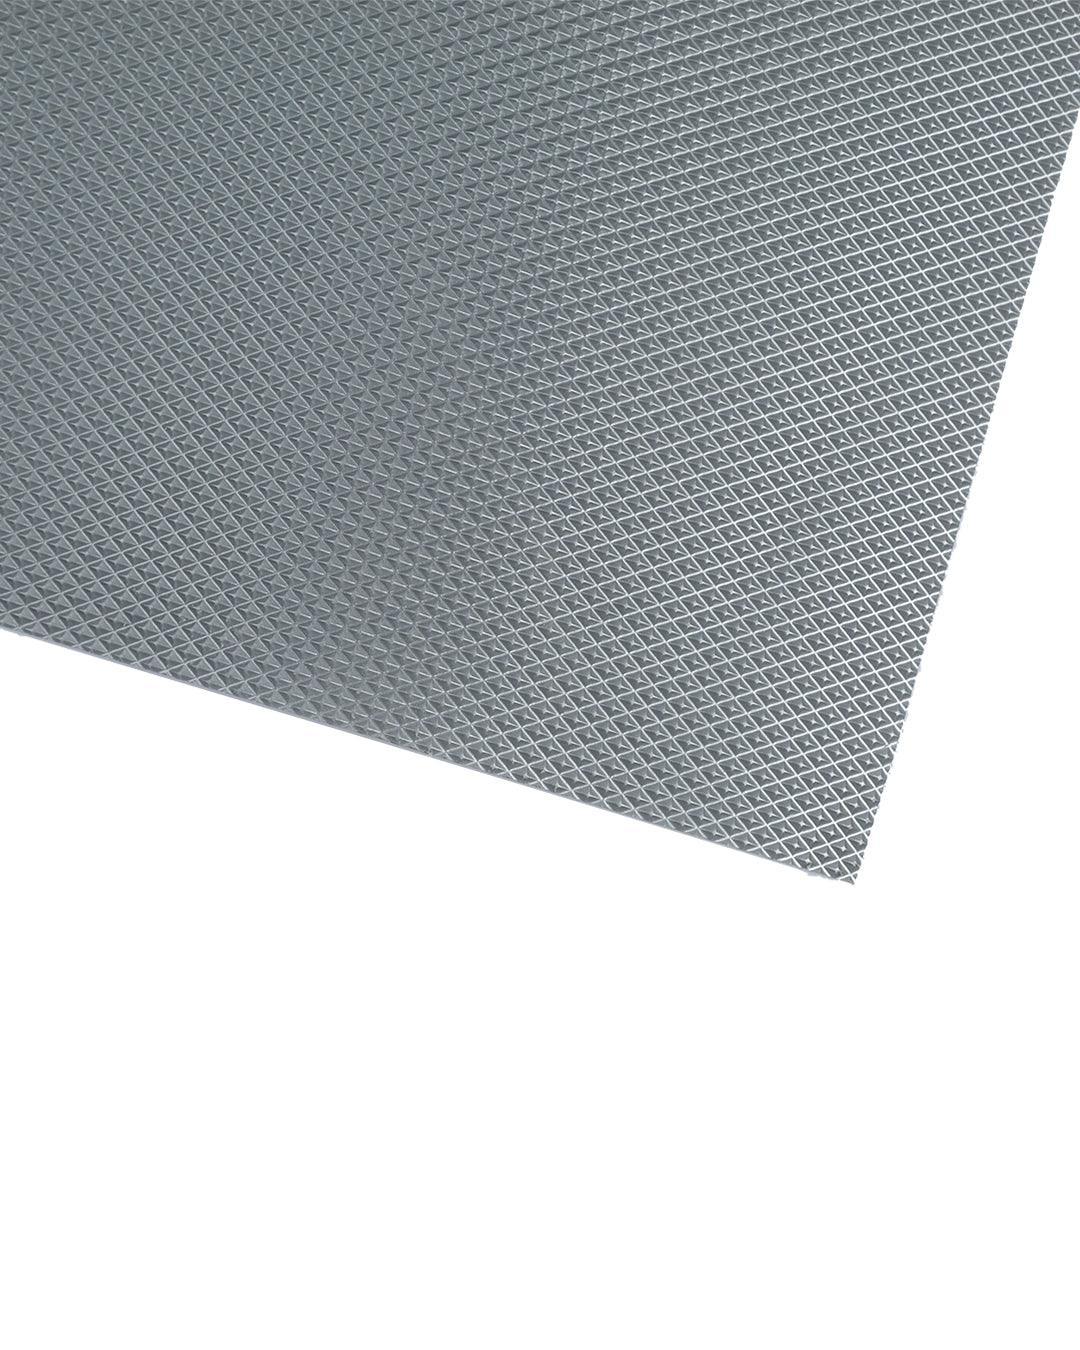 Anti Skid Mat, Grey, Plastic - MARKET 99